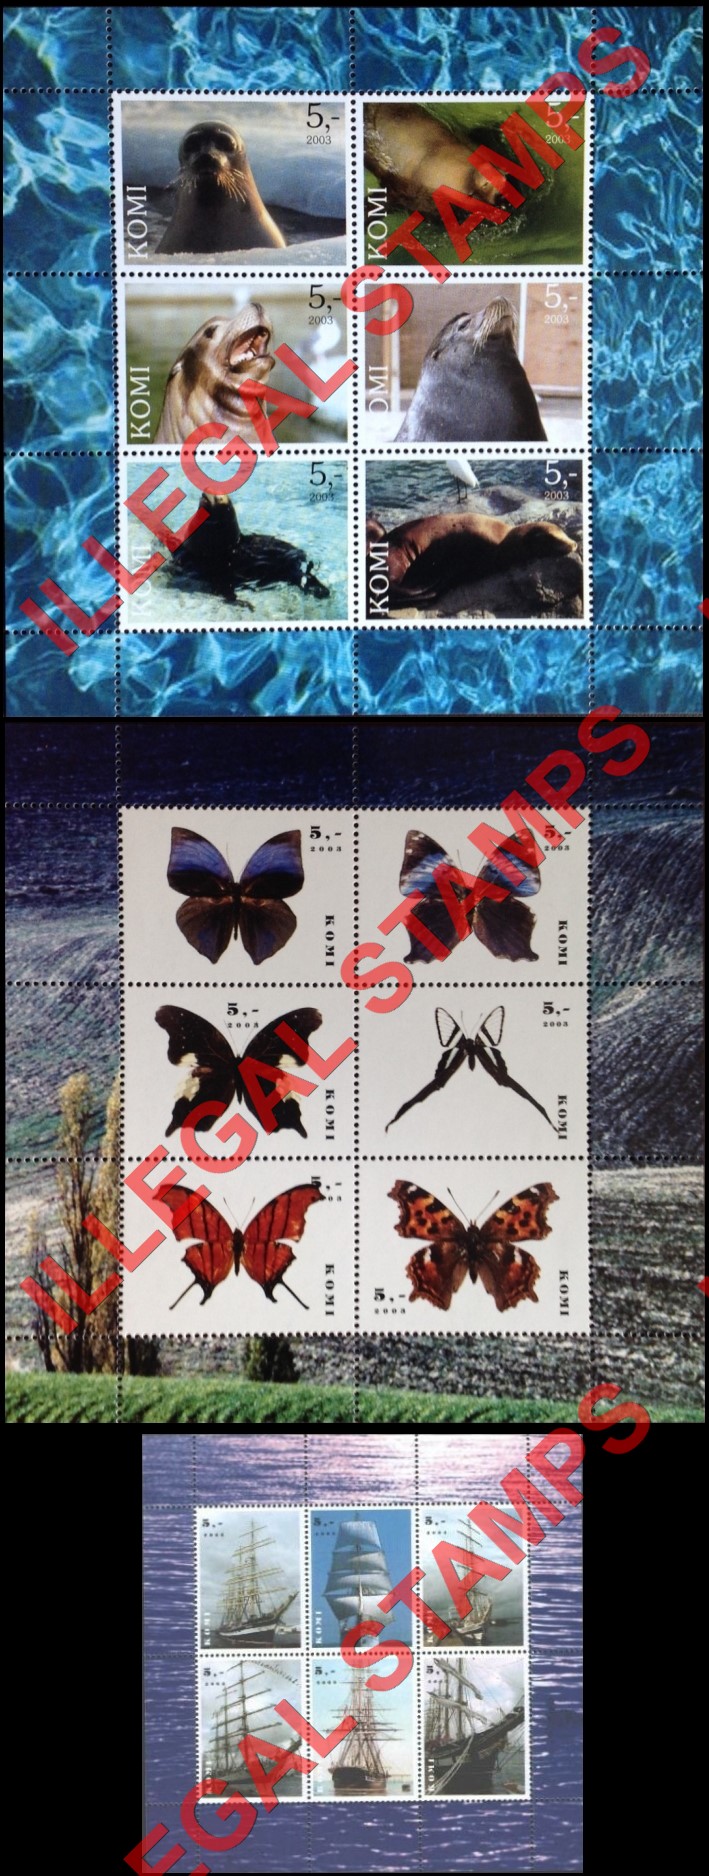 Komi Republic 2003 Counterfeit Illegal Stamps (Part 2)